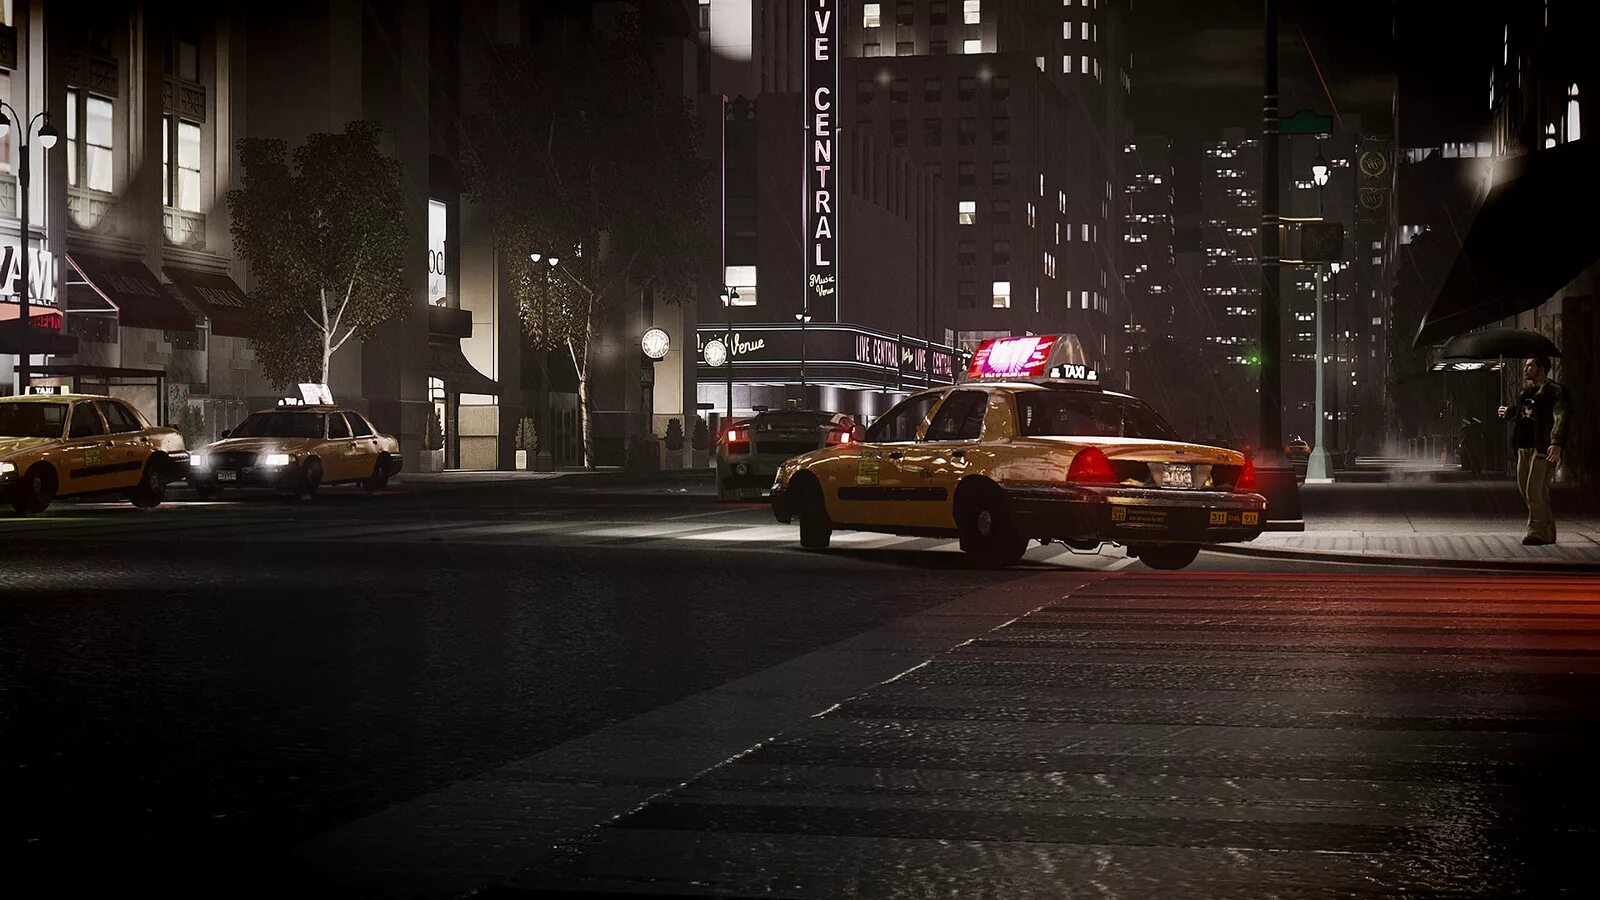 Grand Theft auto IV 4к. ГТА 5 фон улицы. Нью Йорк и Либерти Сити. GTA 4 4k.